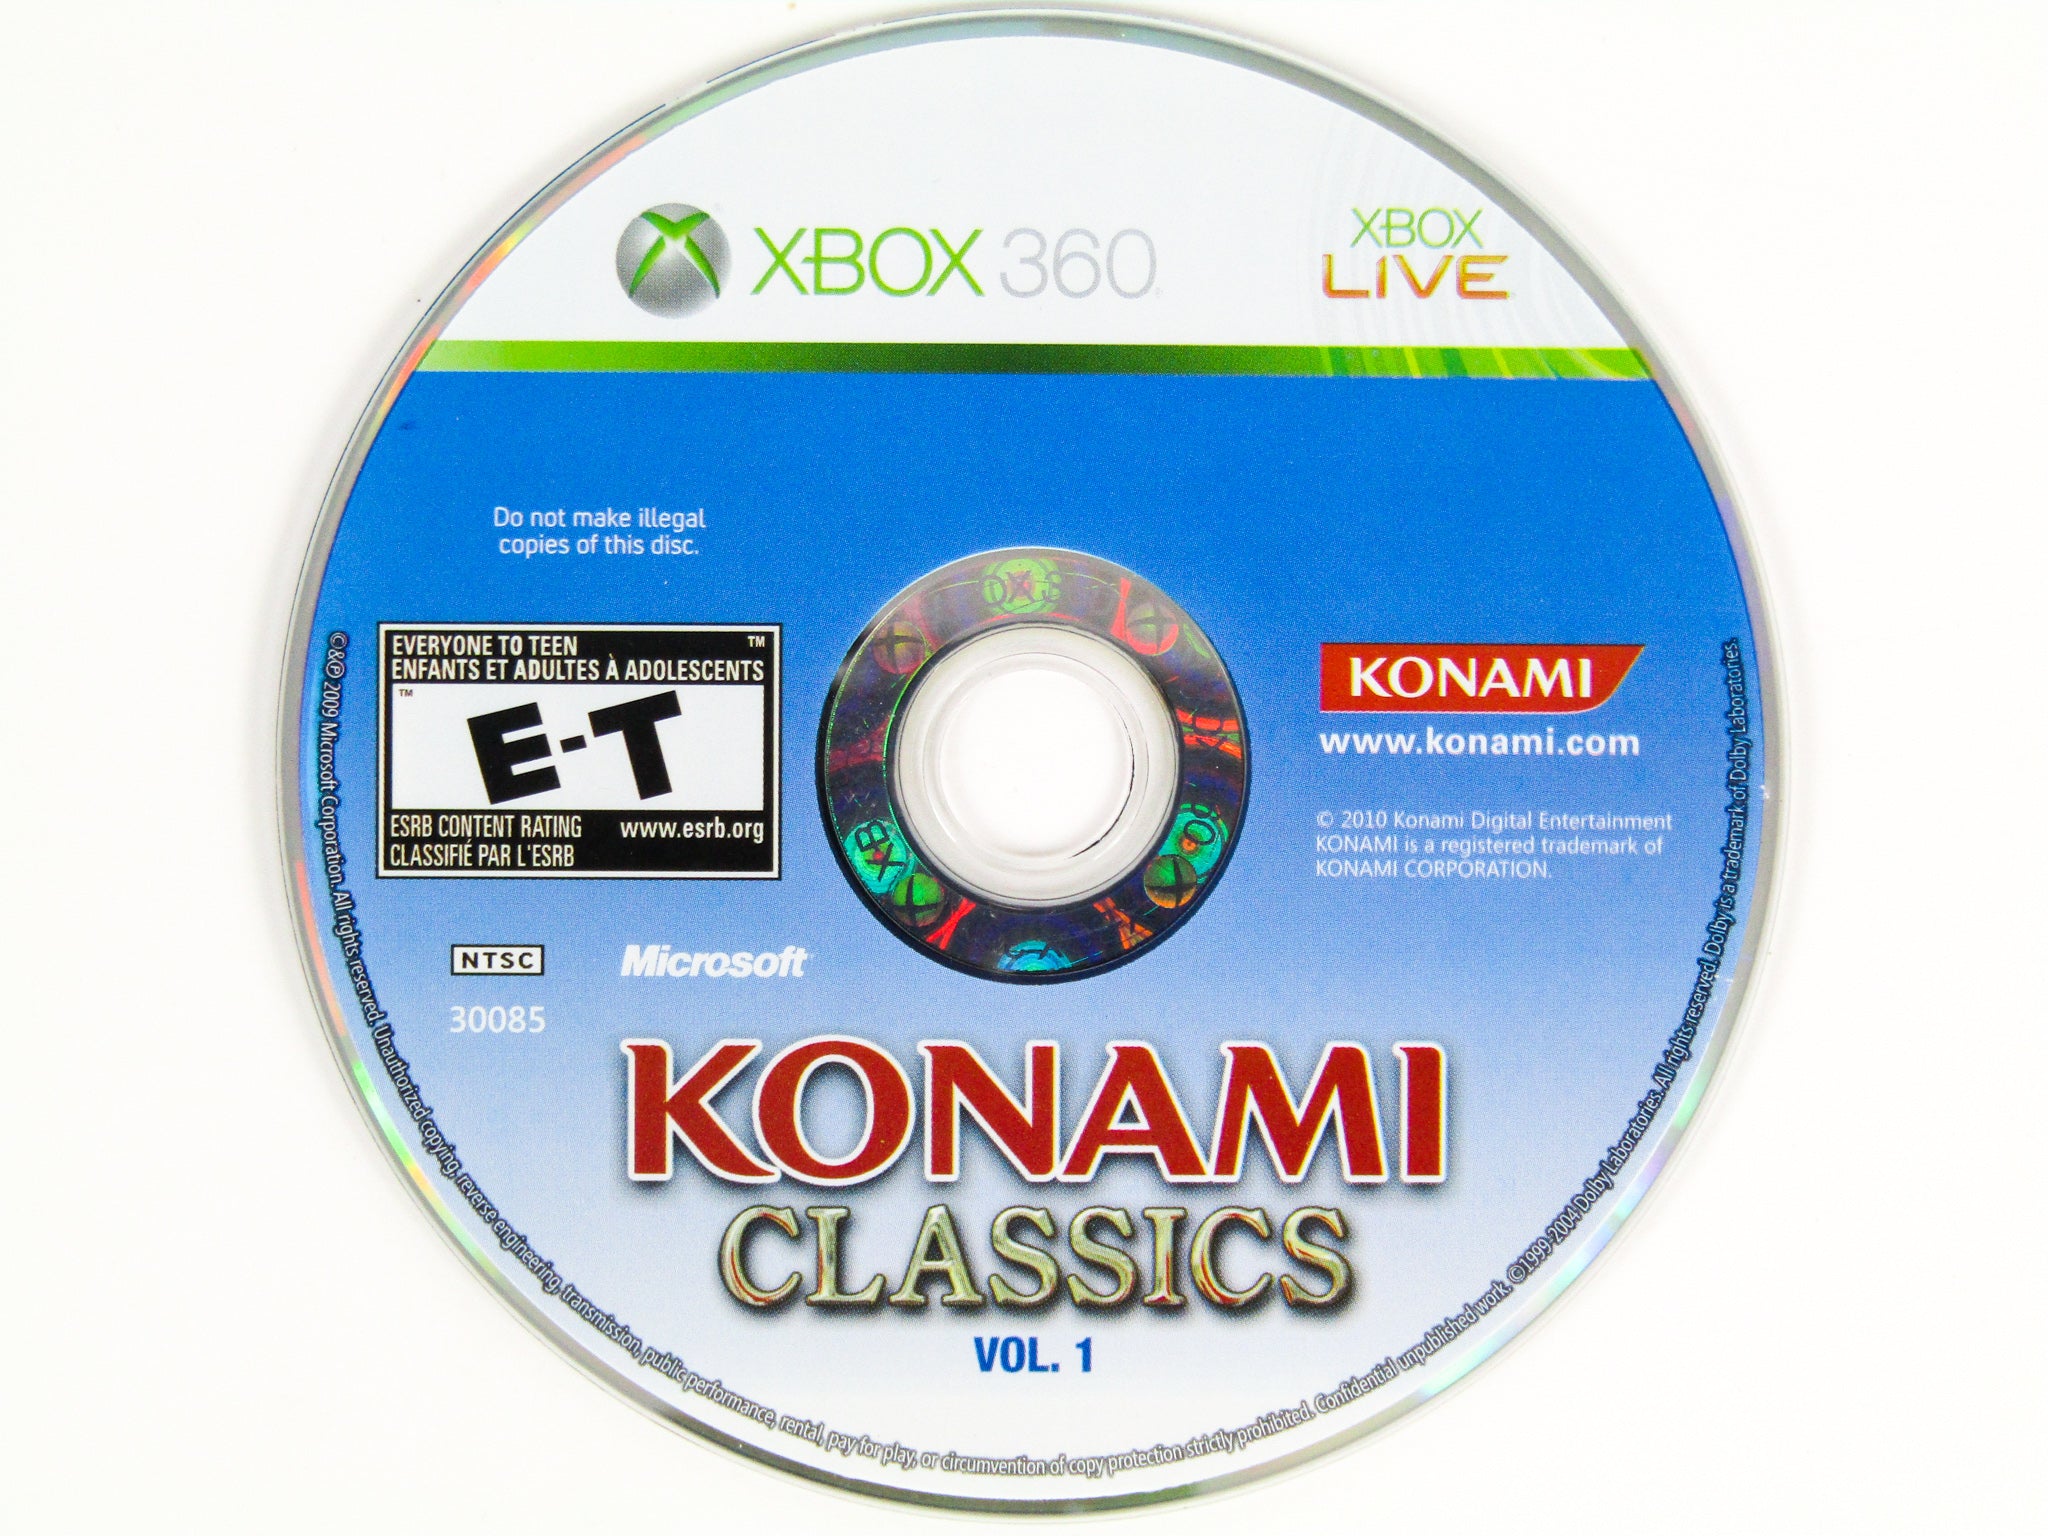 Konami Classics Volume 1 - Xbox 360